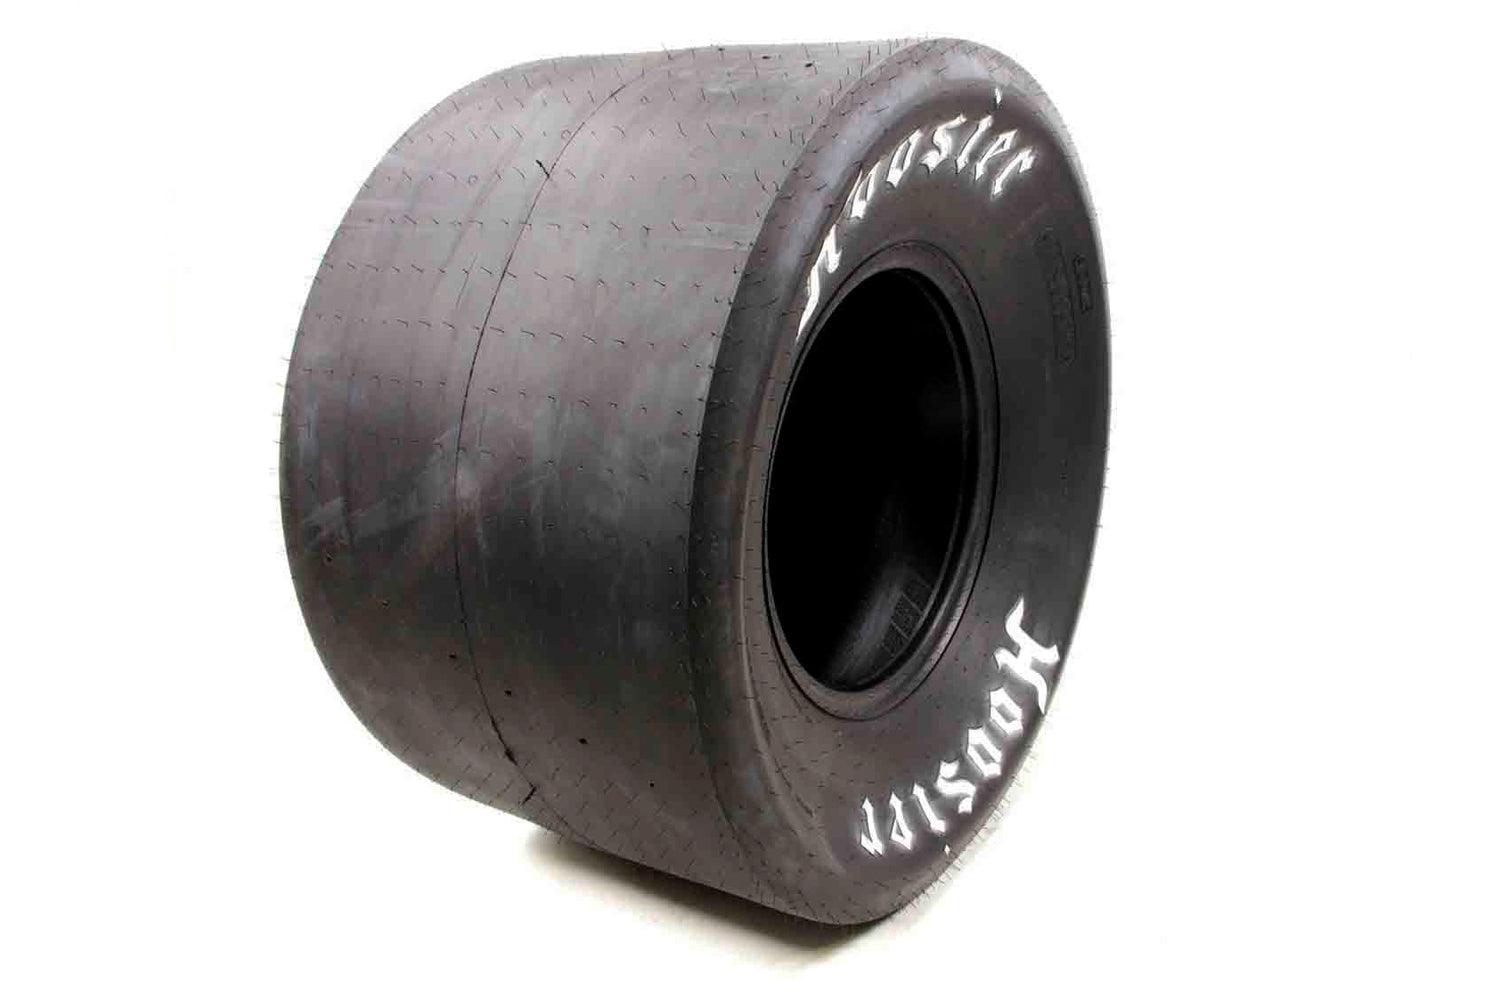 Drag Tire 31.5/12.5W-15 D05 - Burlile Performance Products